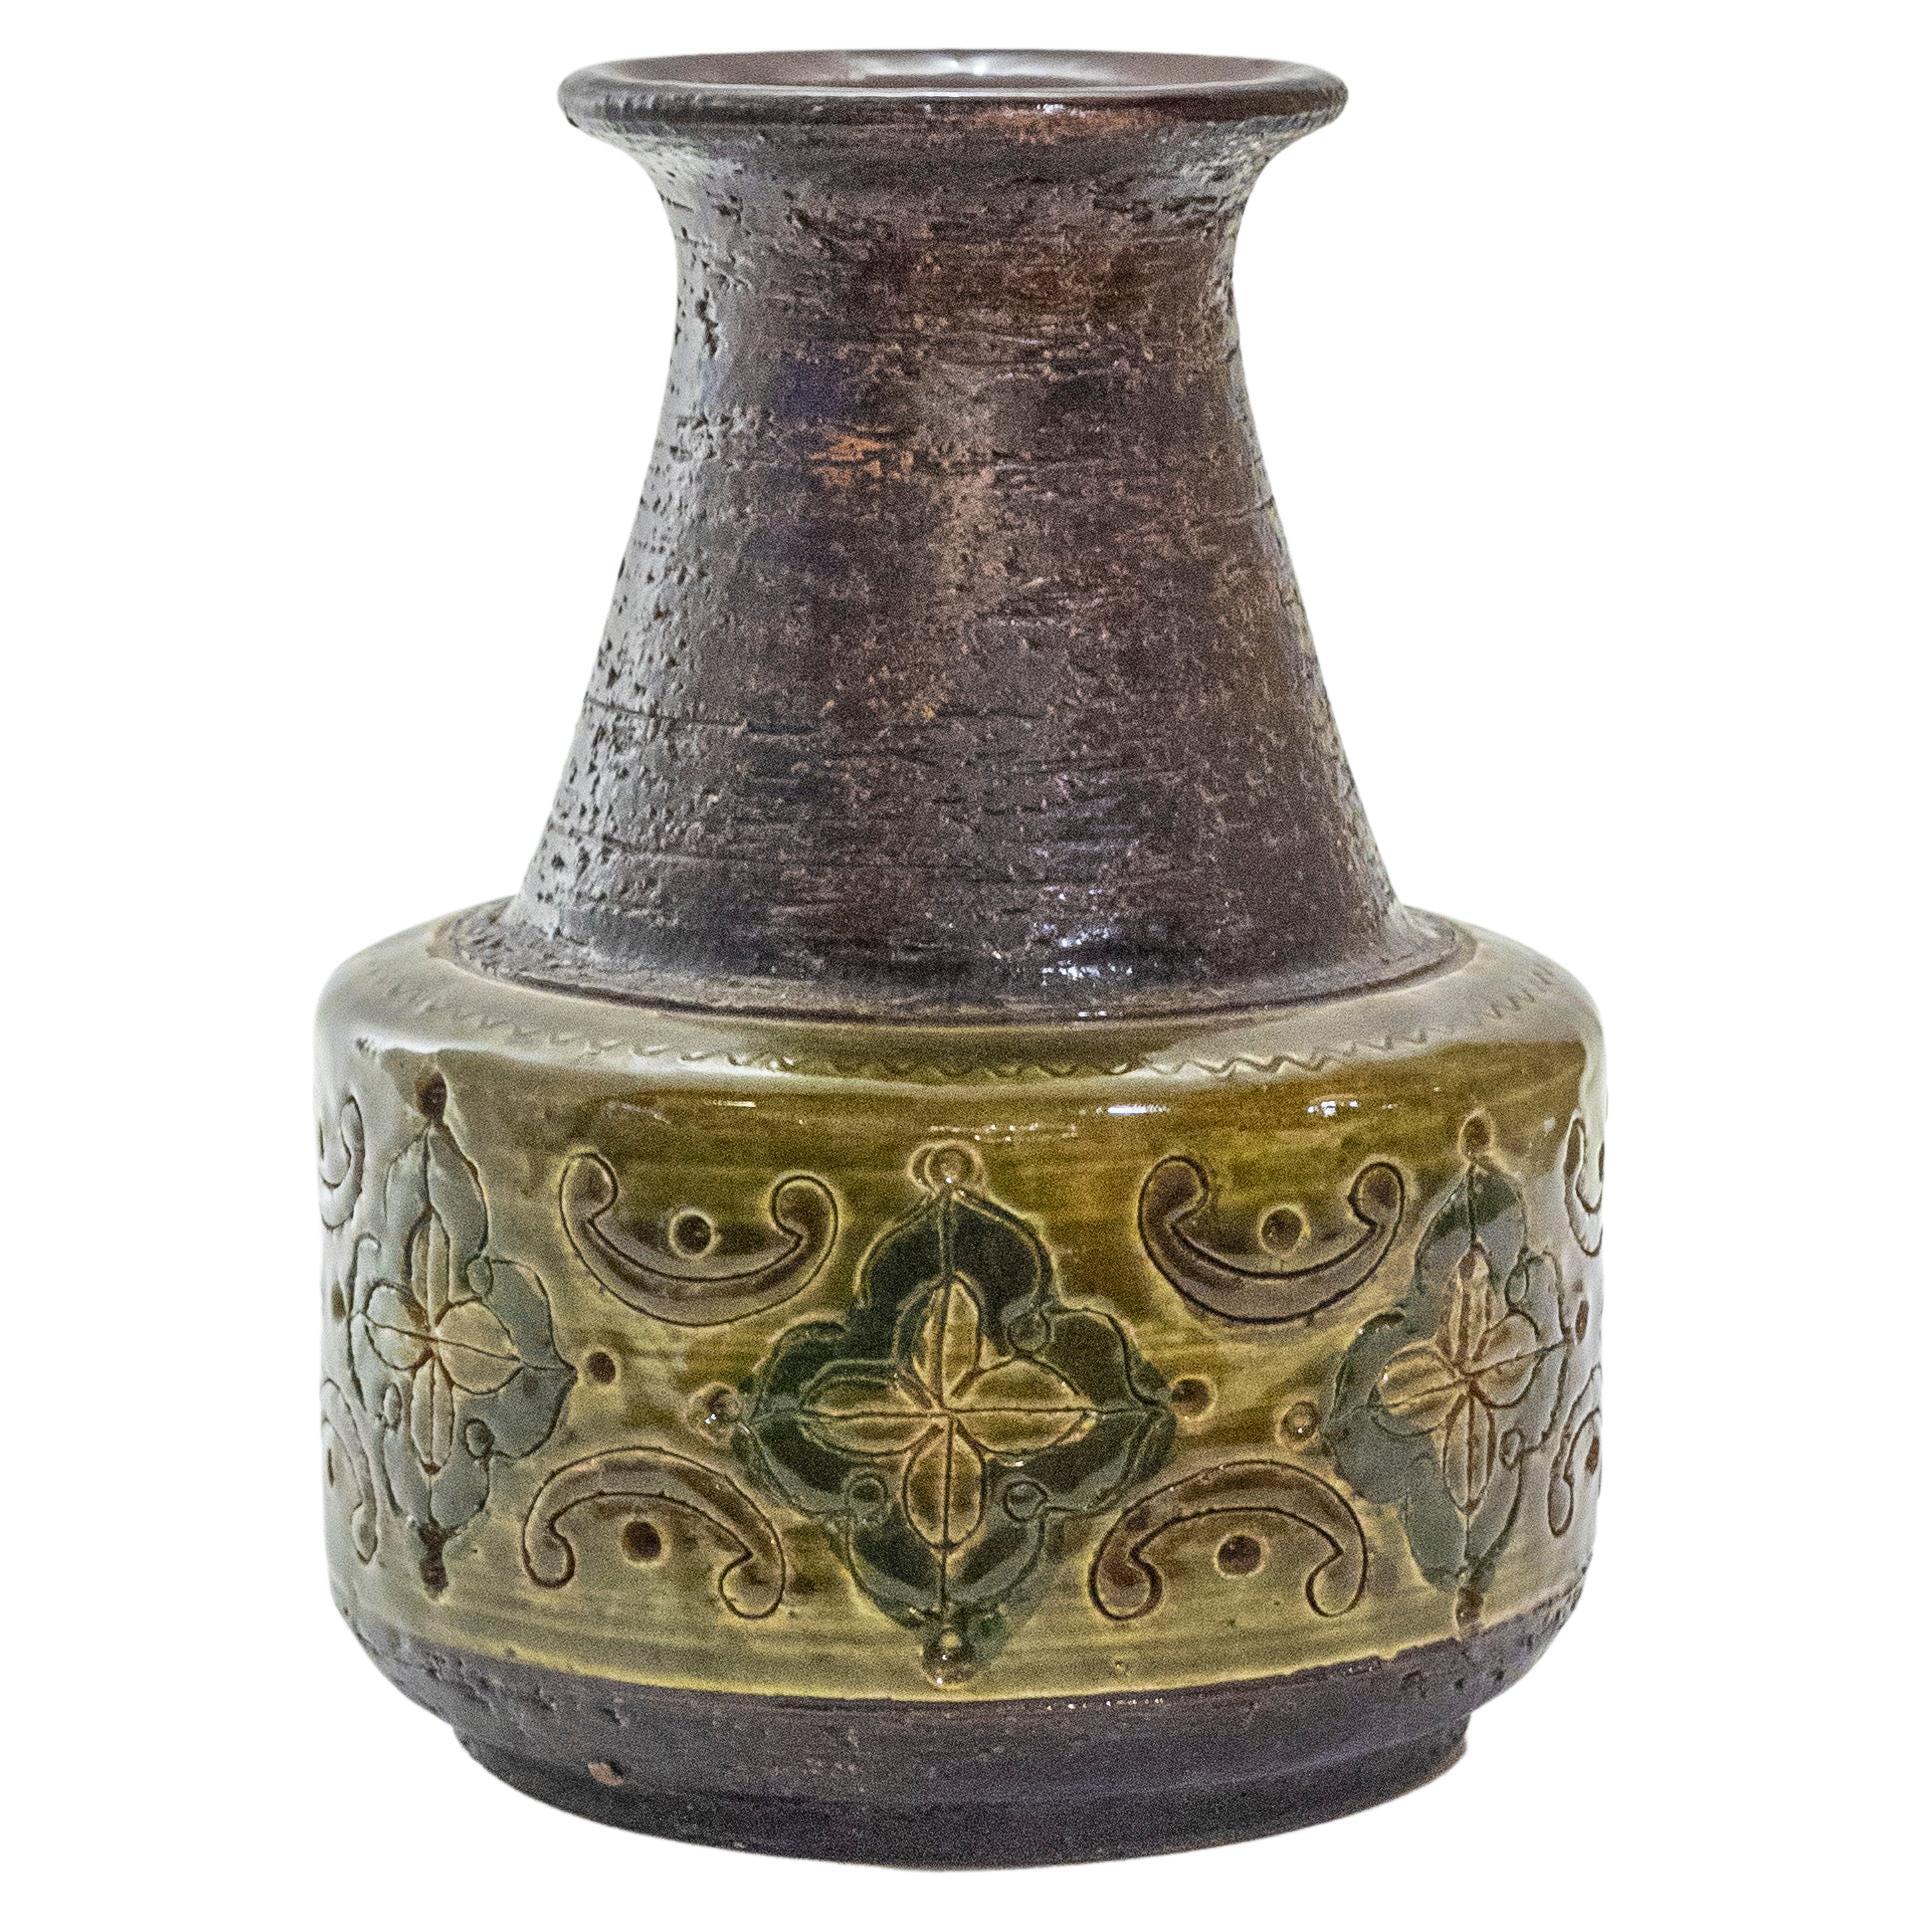 Bitossi Arabesque Ceramic Vase by Aldo Londi, Italy, 1960s